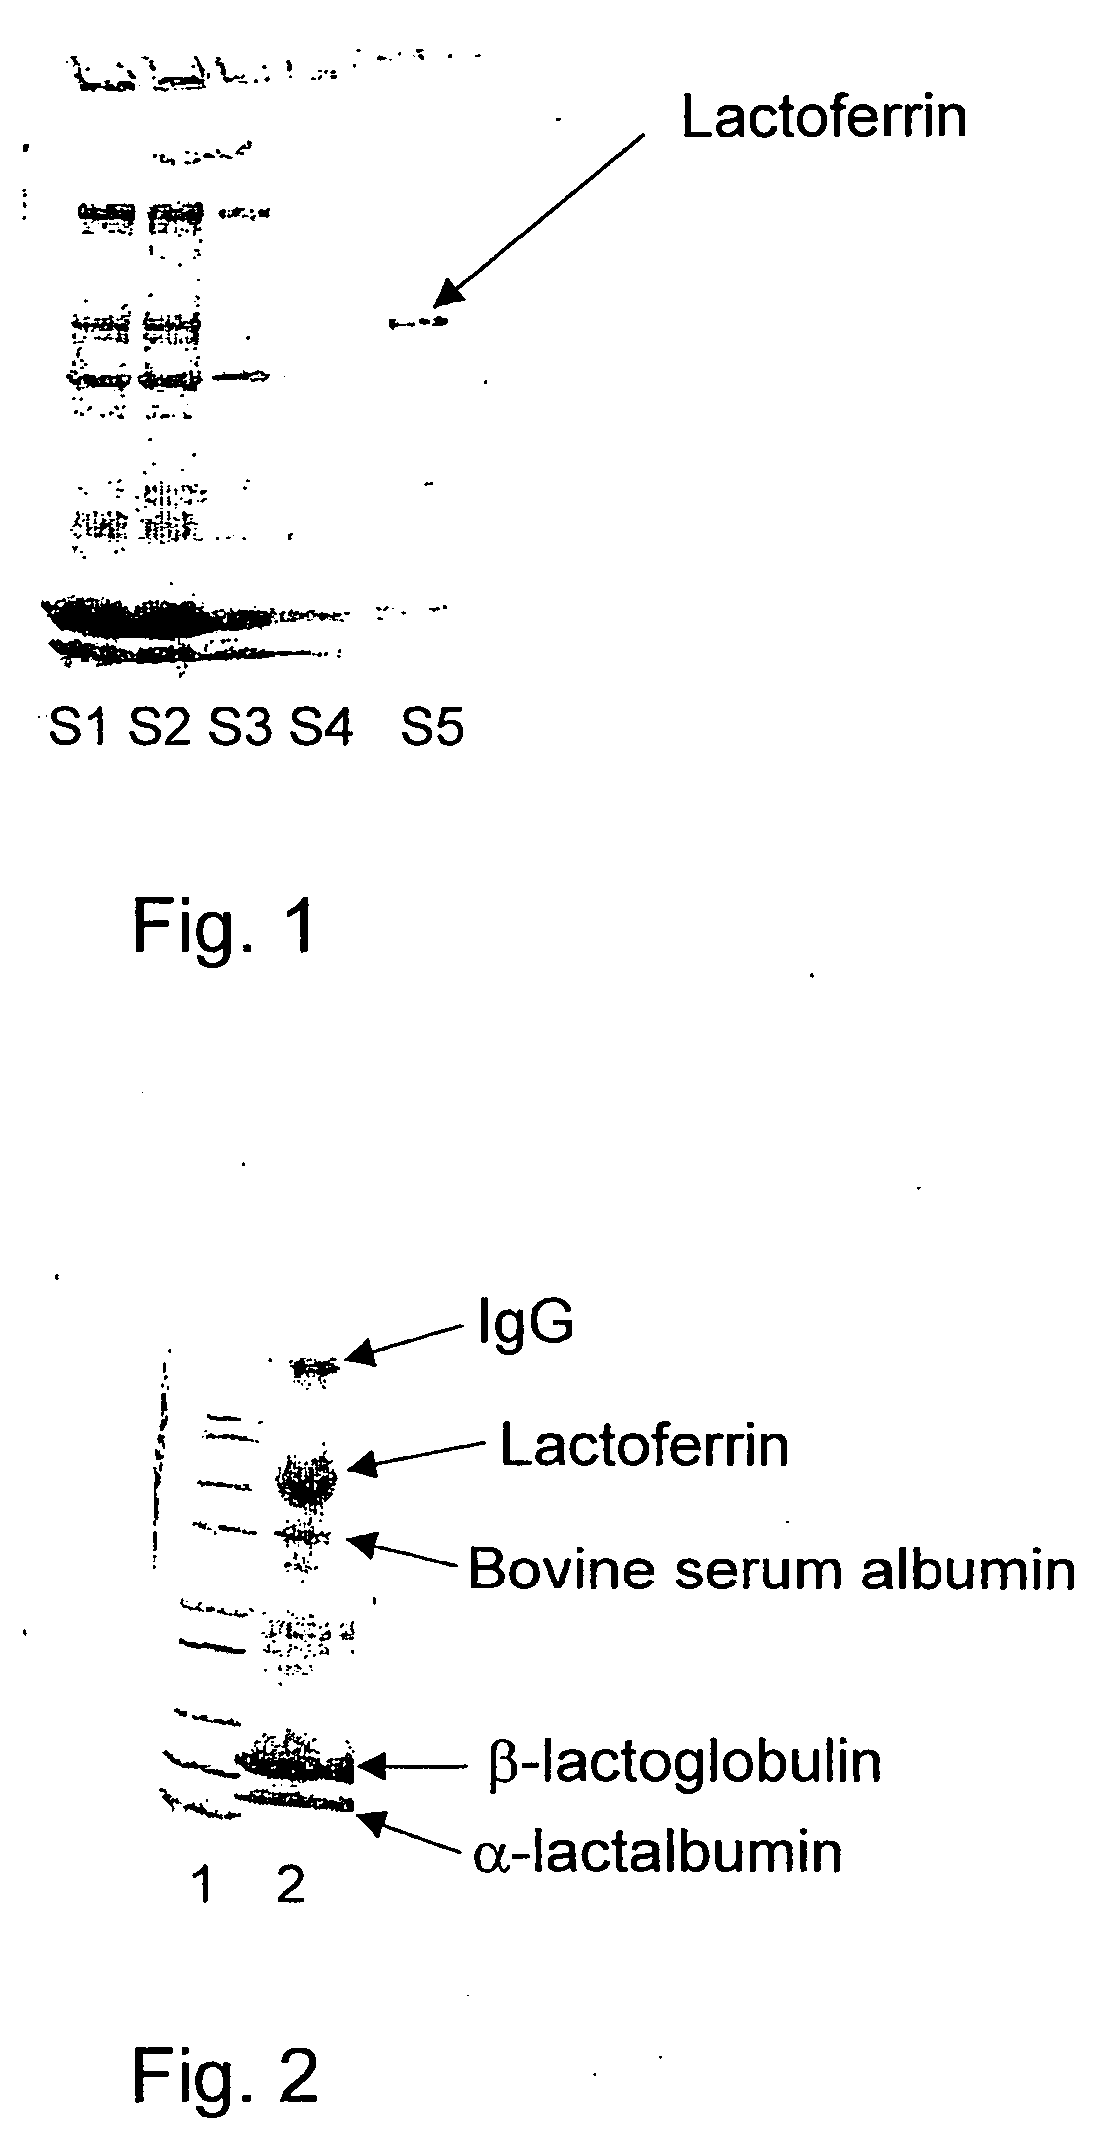 Process of isolating lactoferrin